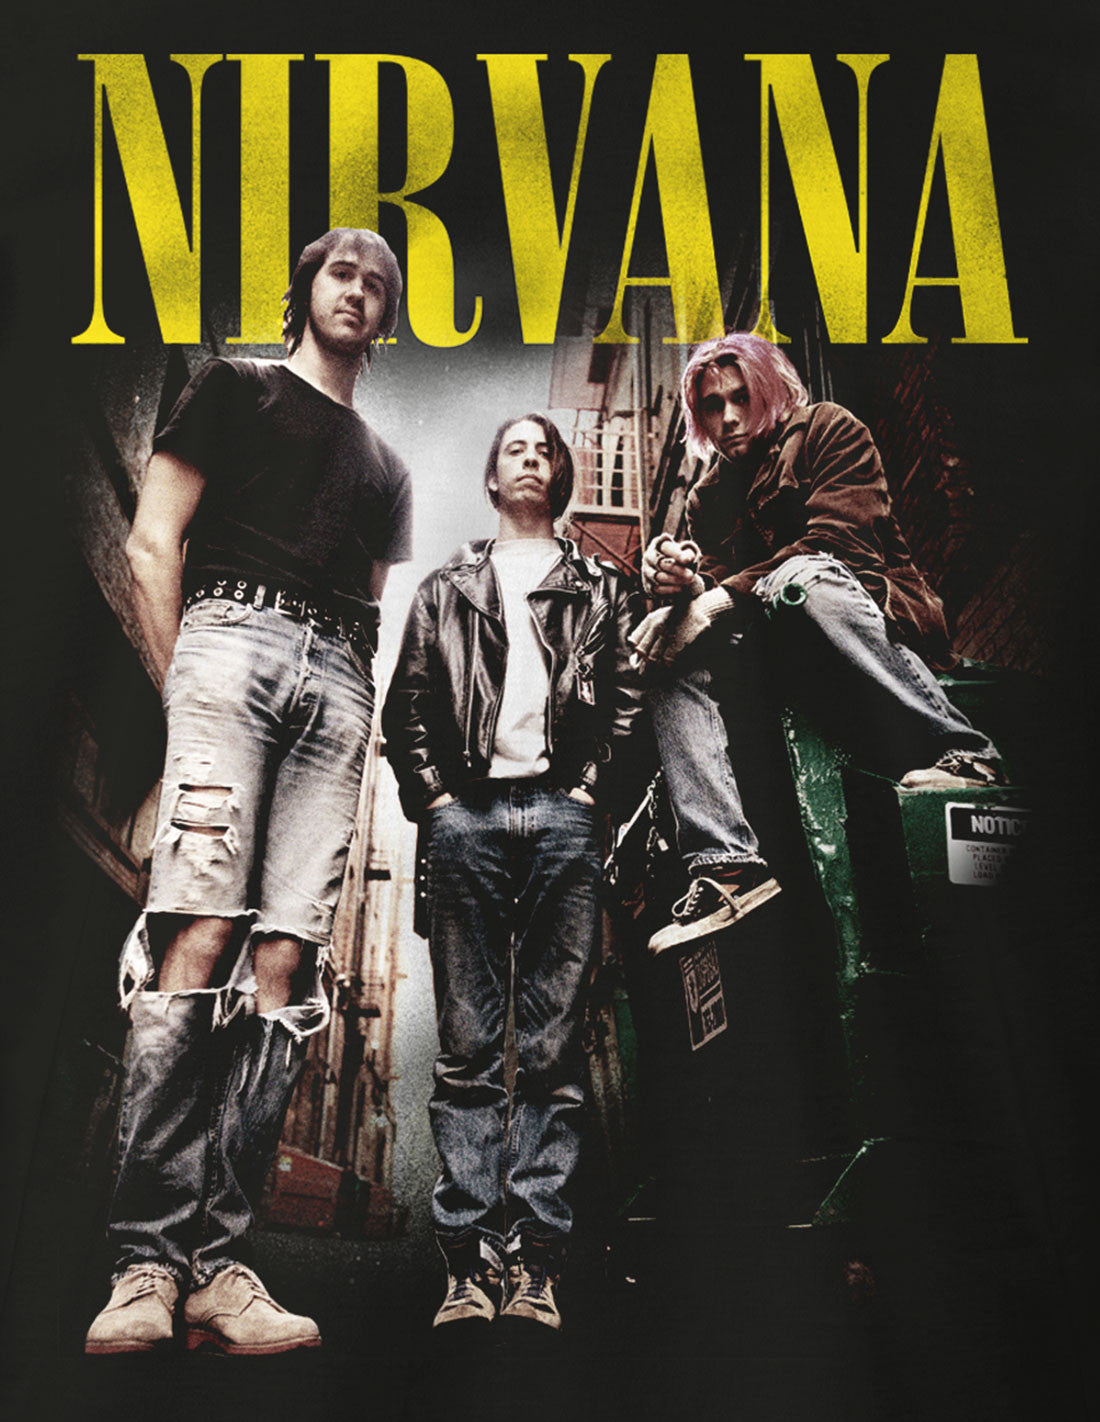 NIRVANA T-shirt - Group